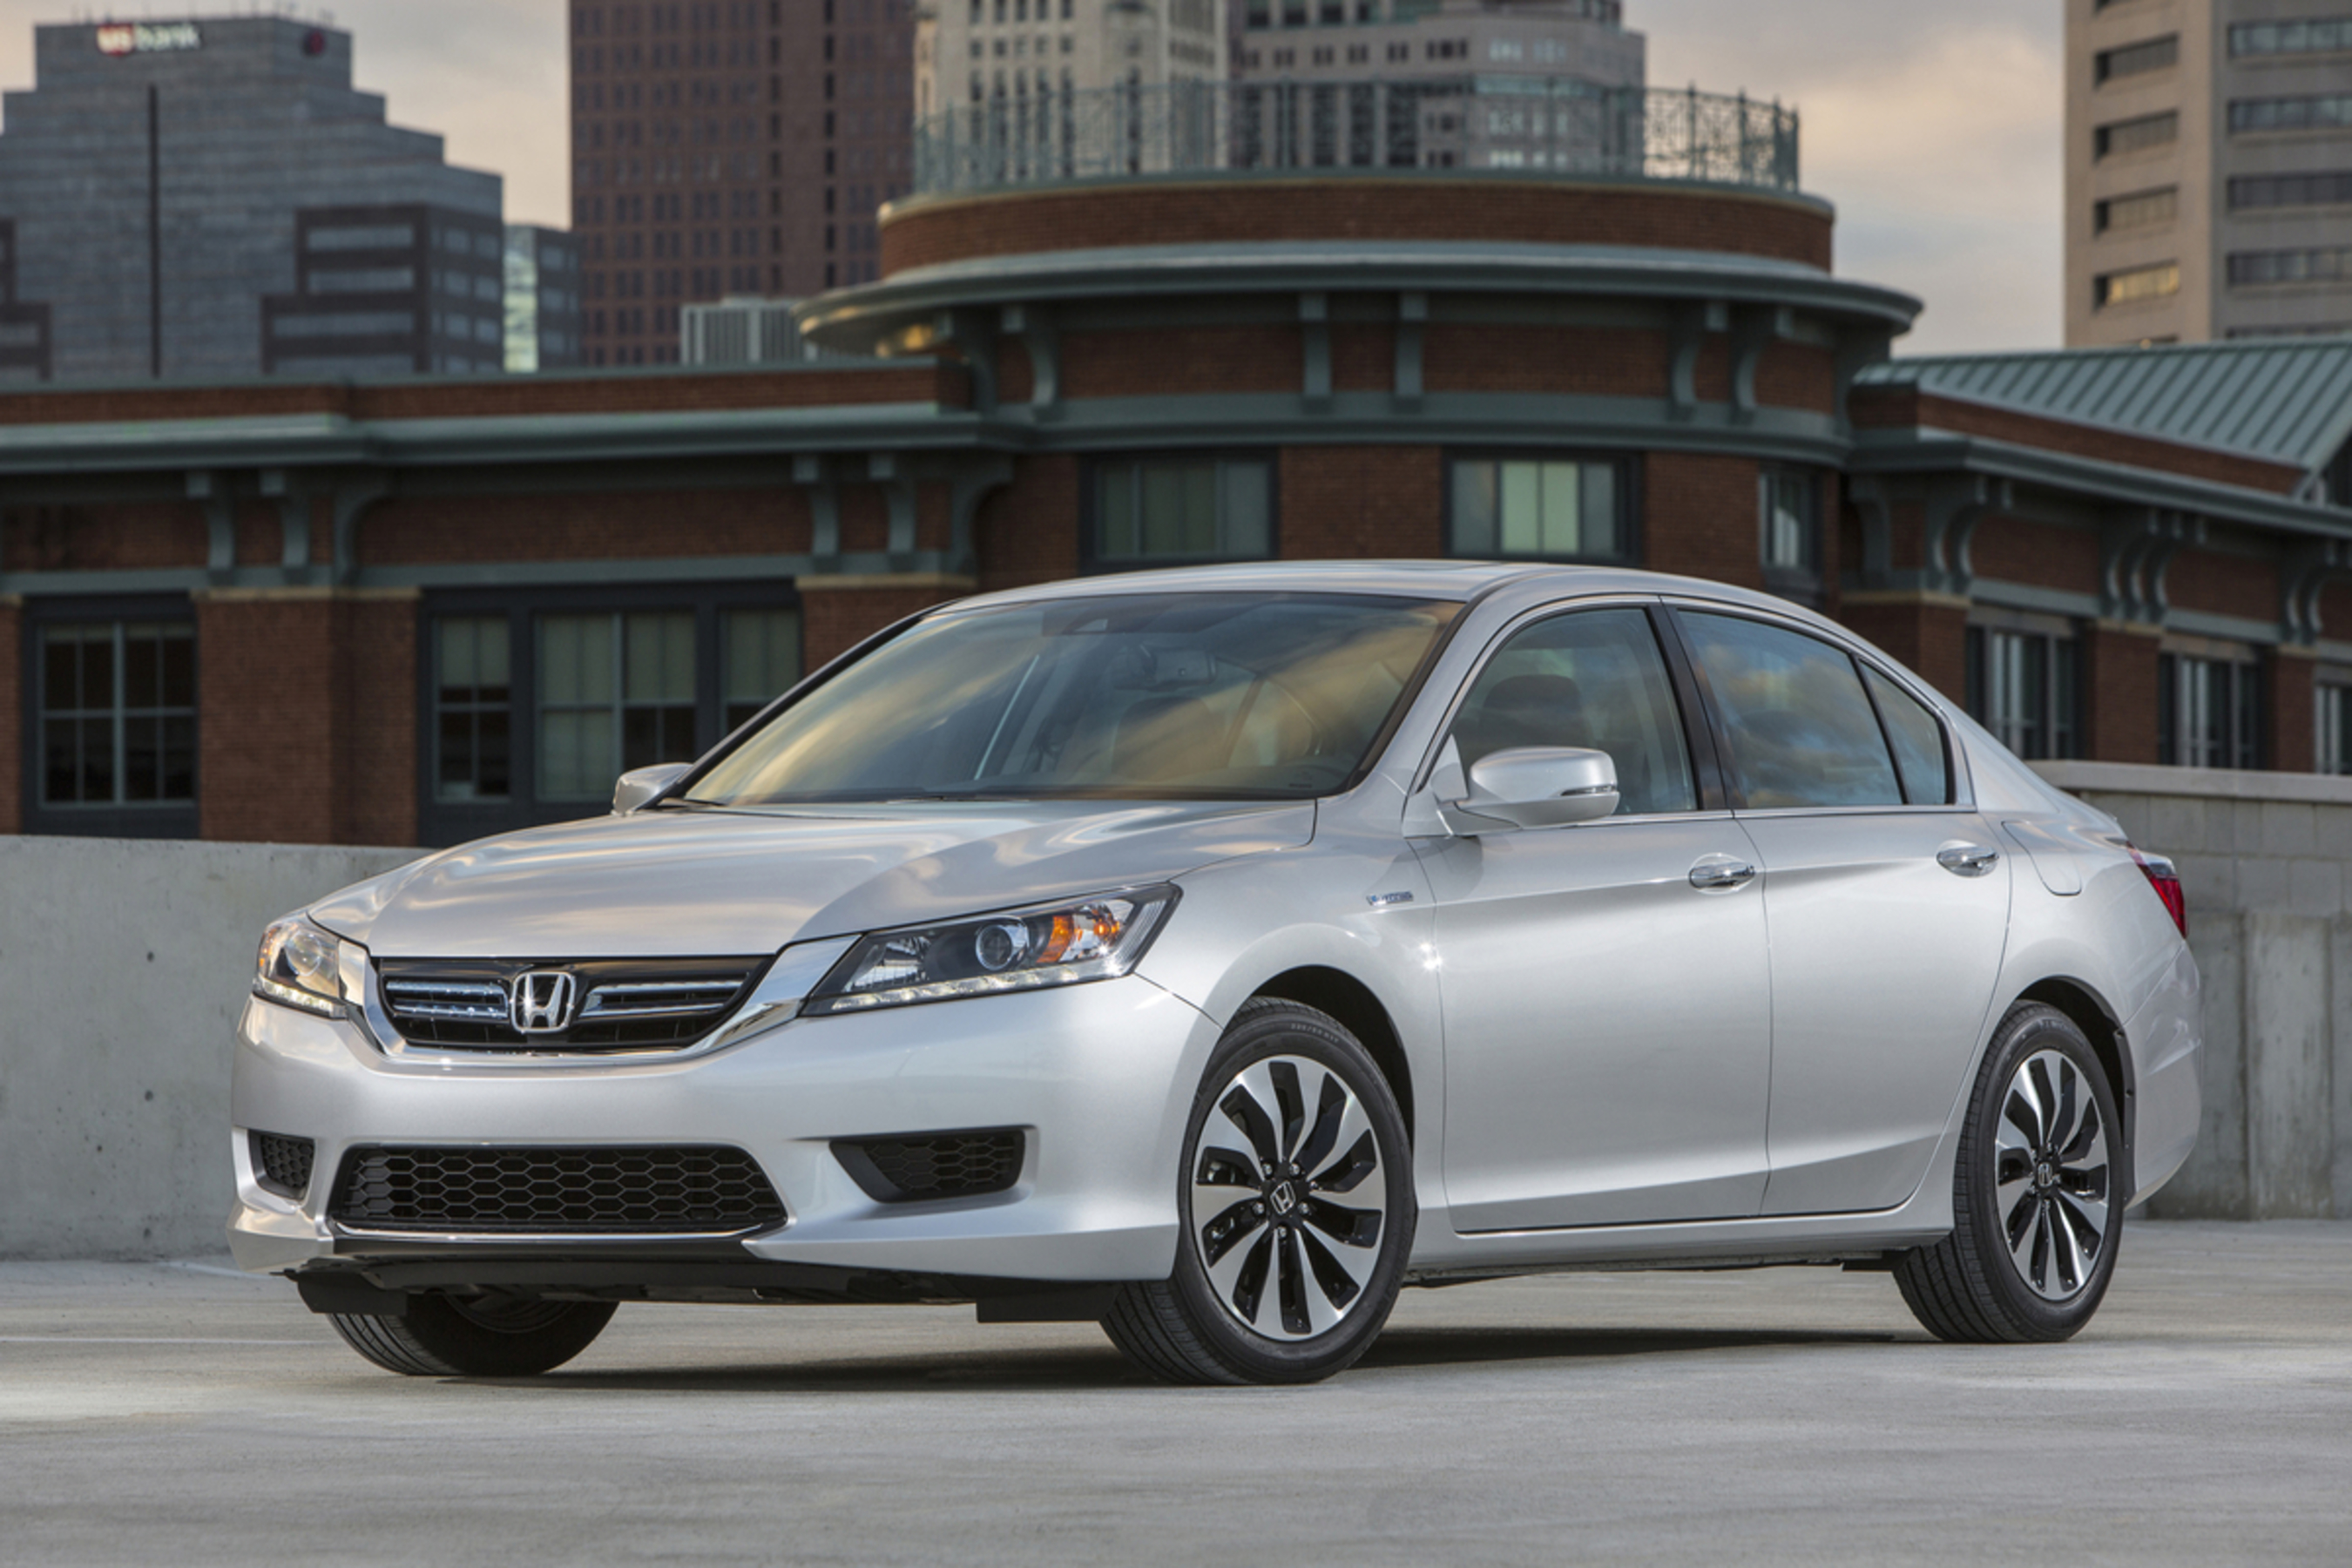 Honda Accord Hybrid and Civic Natural Gas Named to KBB.com's 10 Best Green Cars of 2014 List. (PRNewsFoto/American Honda Motor Co., Inc.)